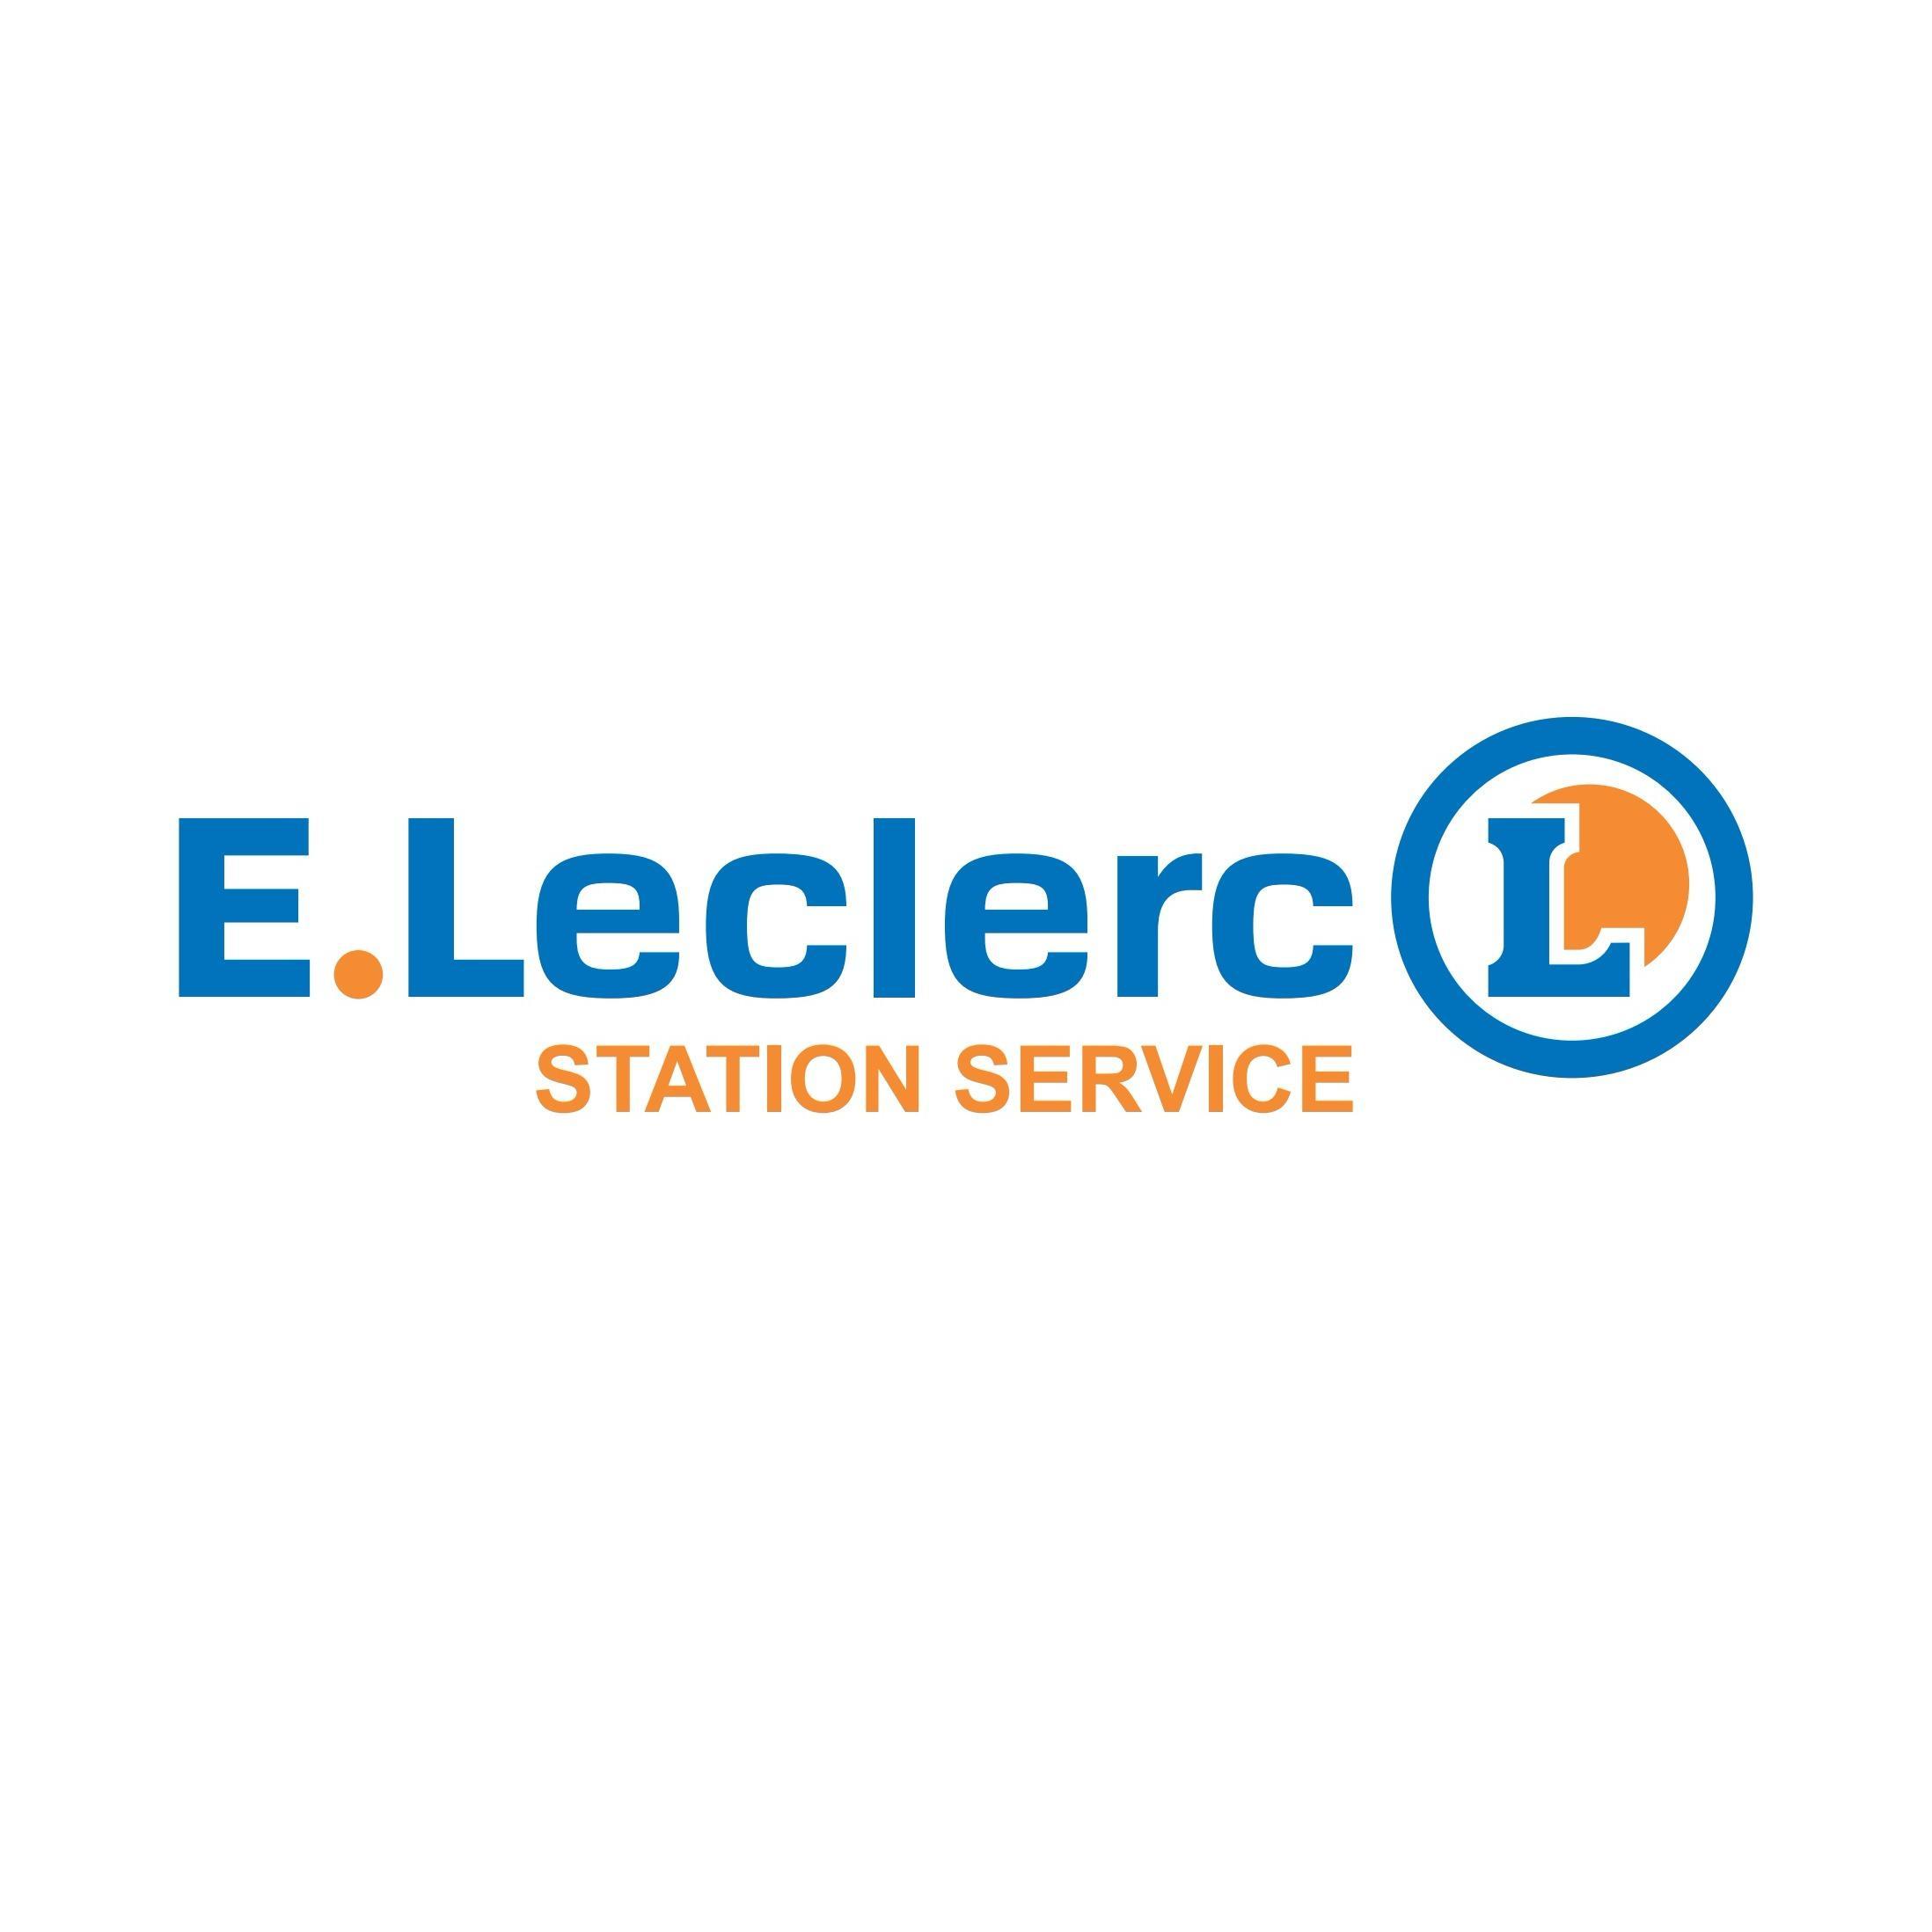 E.leclerc Station Service Franconville